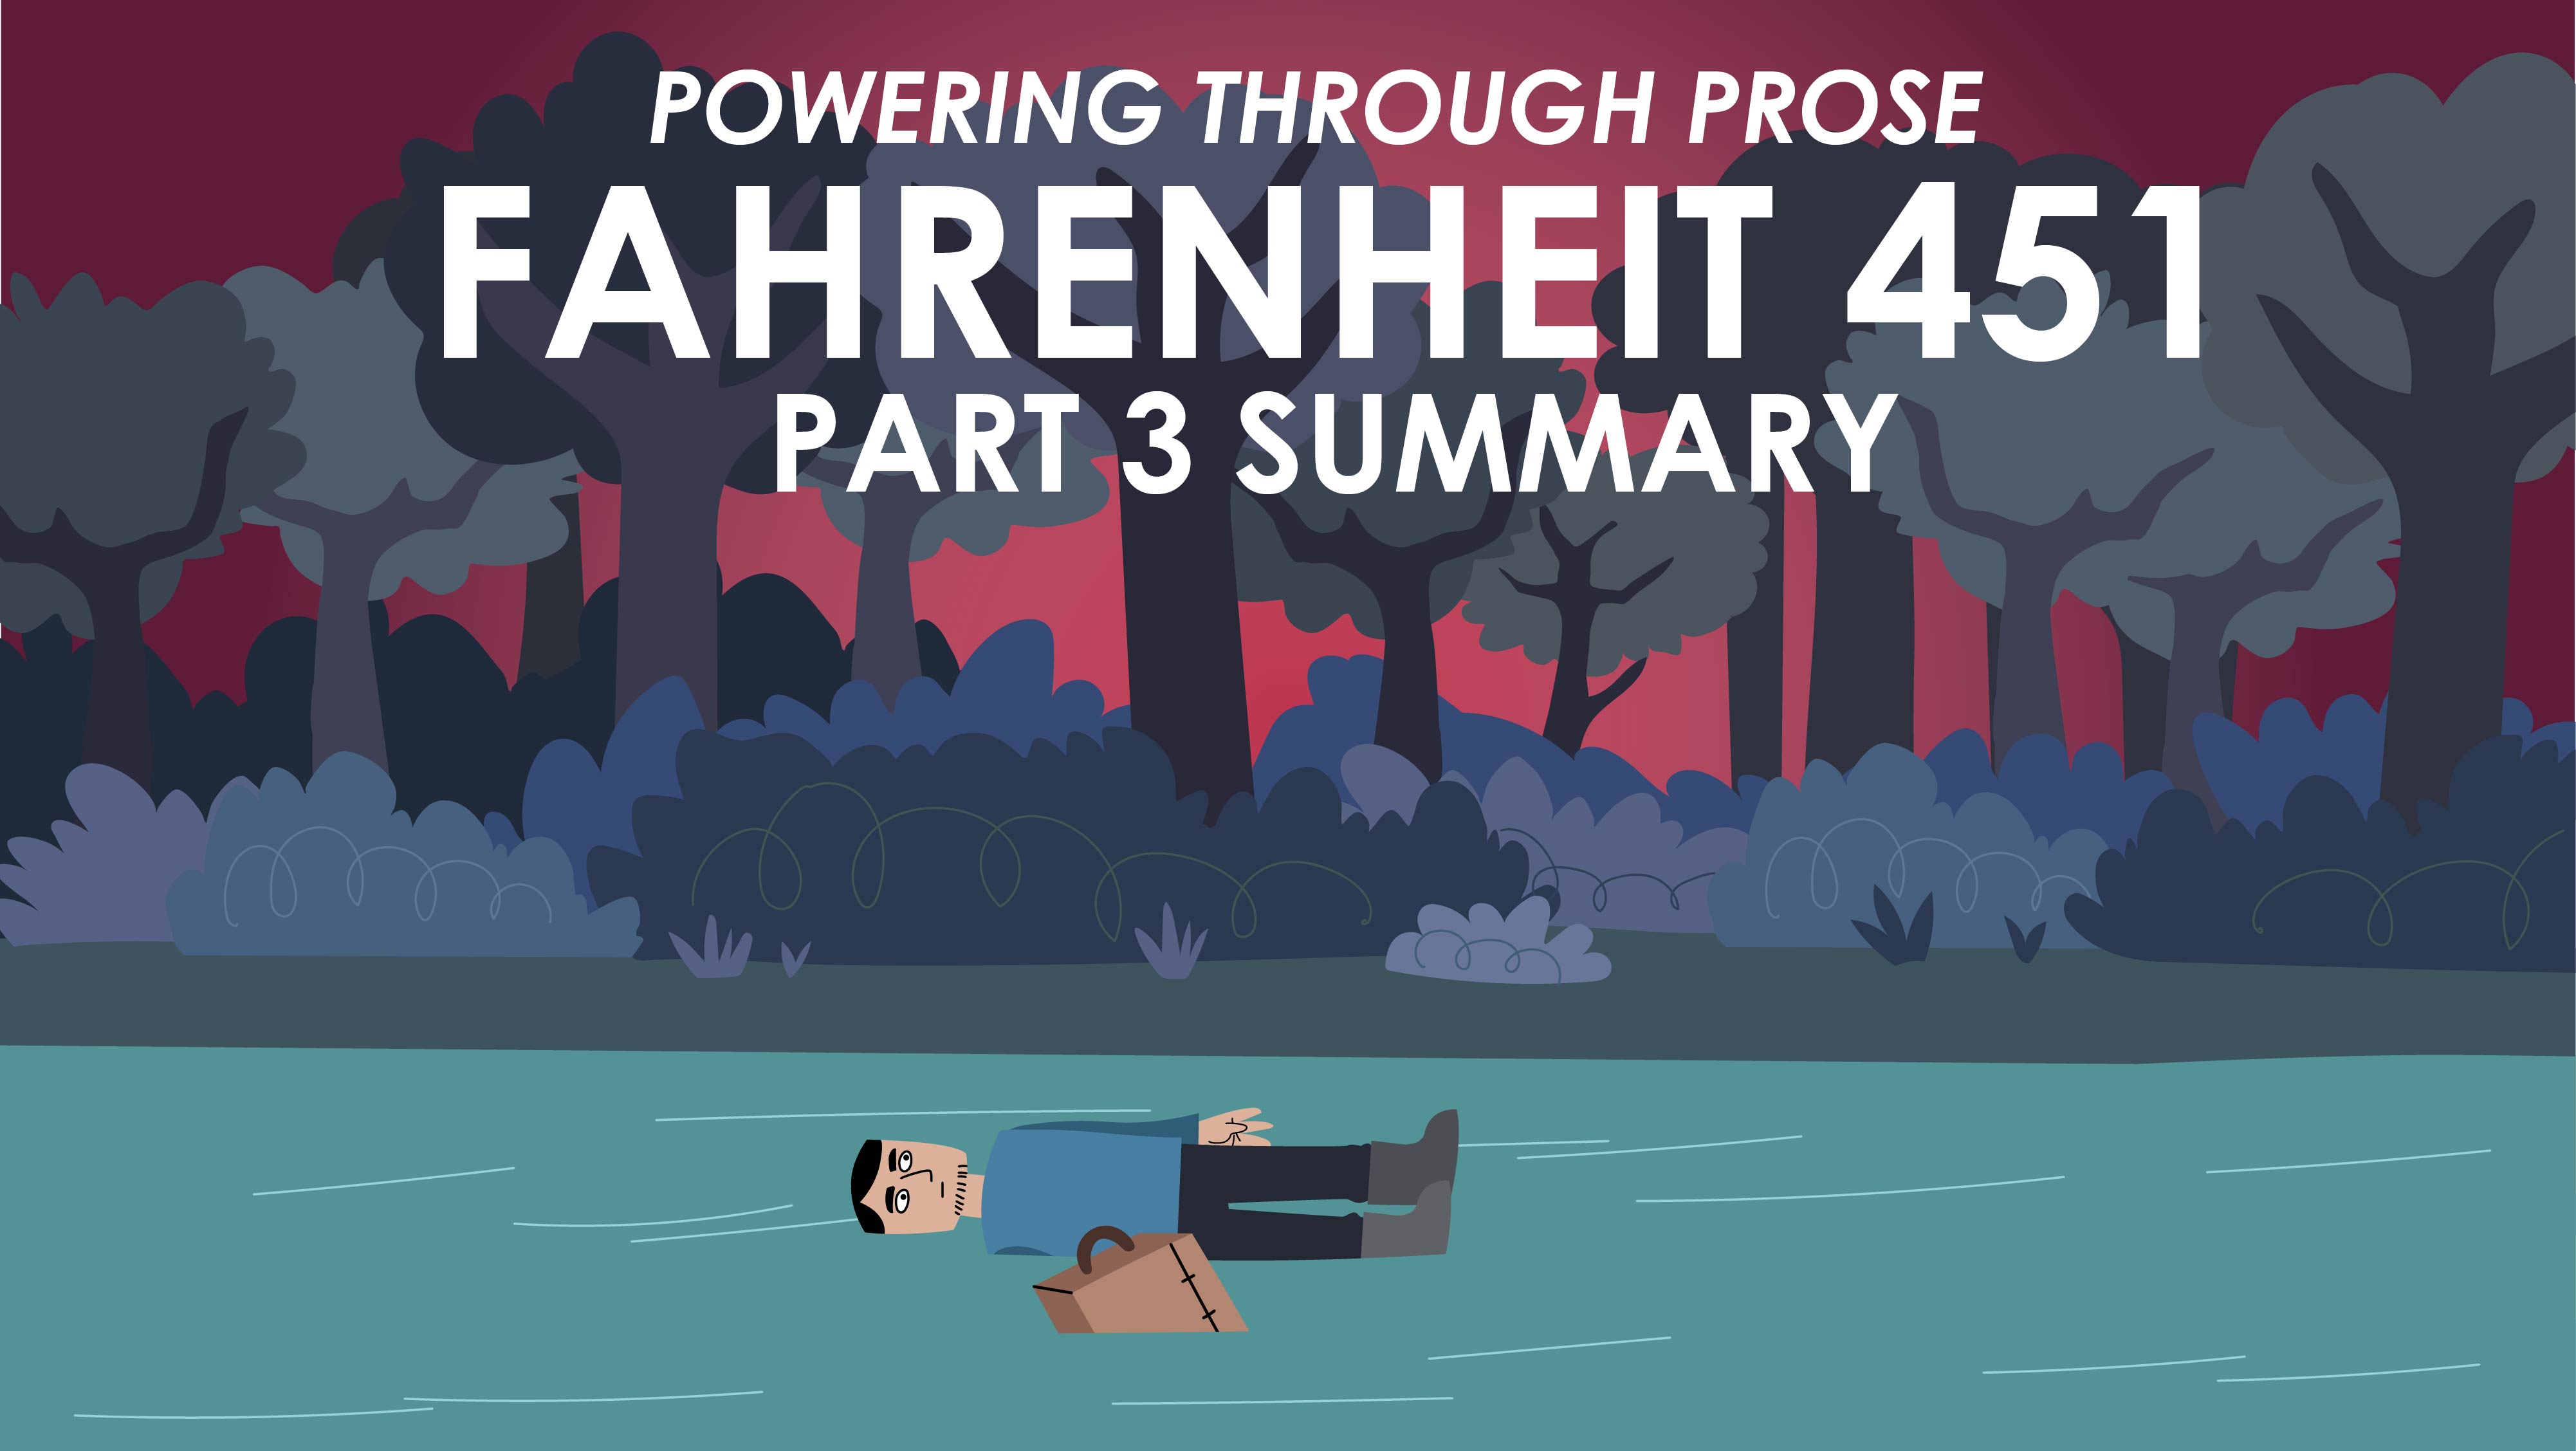 Fahrenheit 451 - Ray Bradbury - Part 3 - Powering Through Prose Series